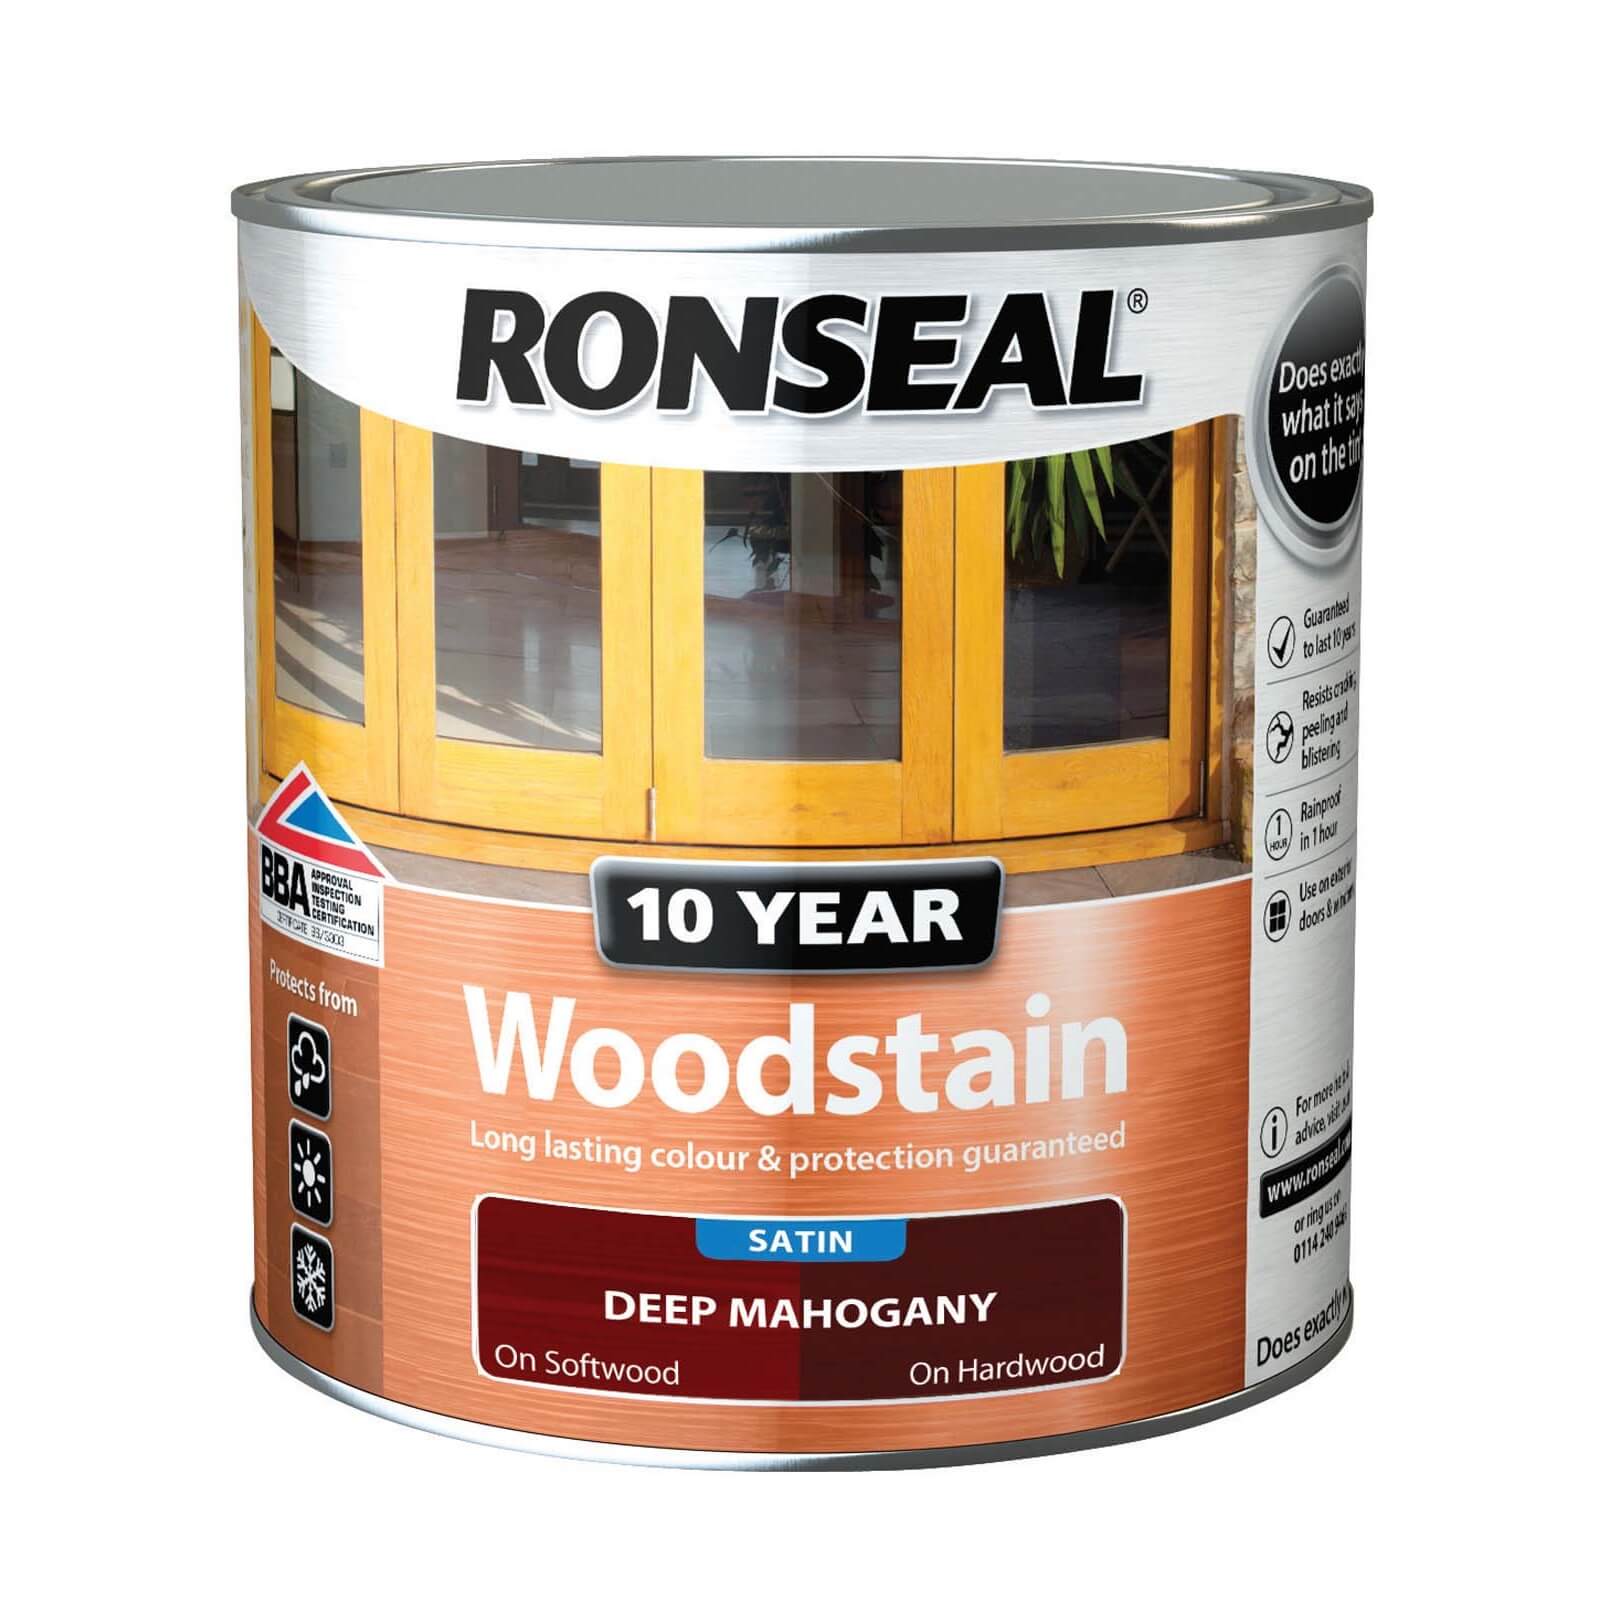 Ronseal 10 Year Woodstain Deep Mahogany Satin -  750ml